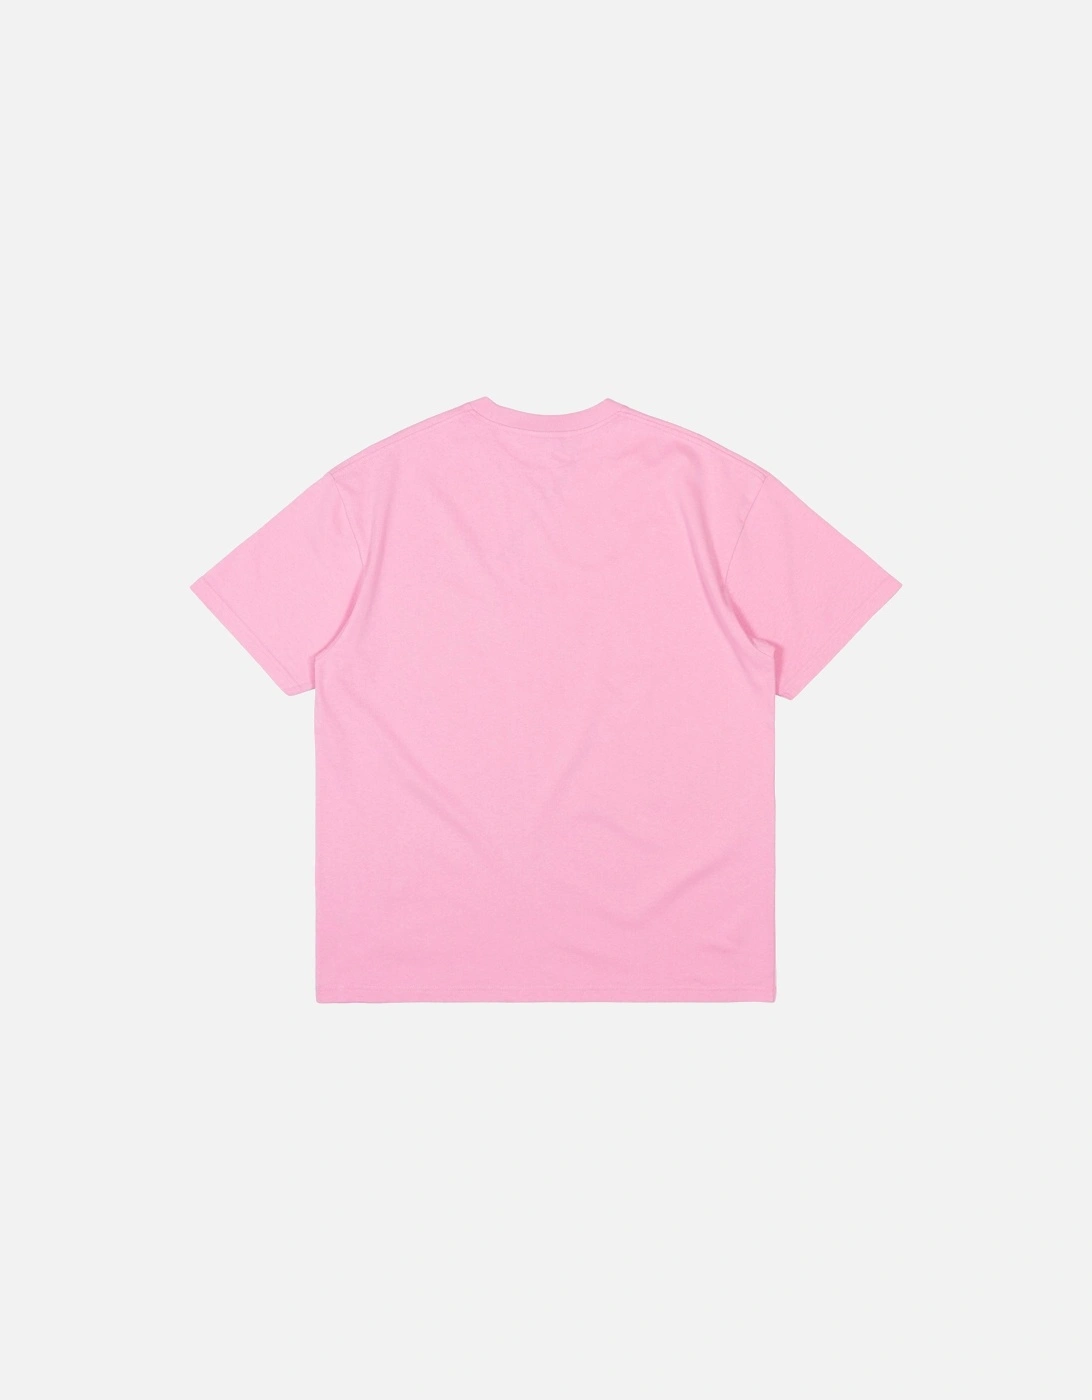 Spider Web T-Shirt - Pink